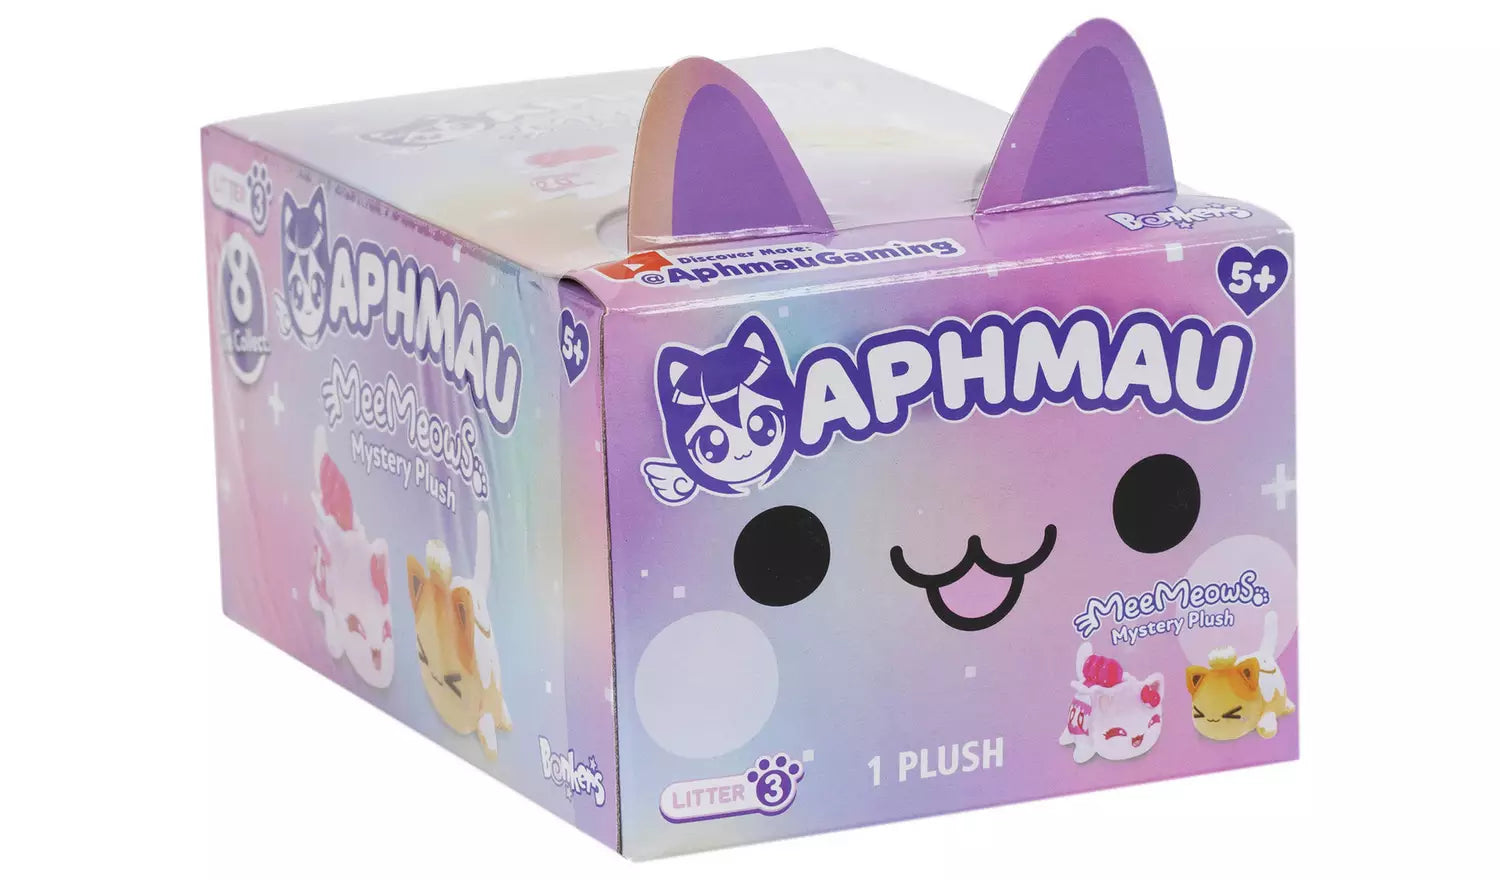 Aphmau MeeMeows Mystery Litter 3 Plush 6 Inch Soft Toy